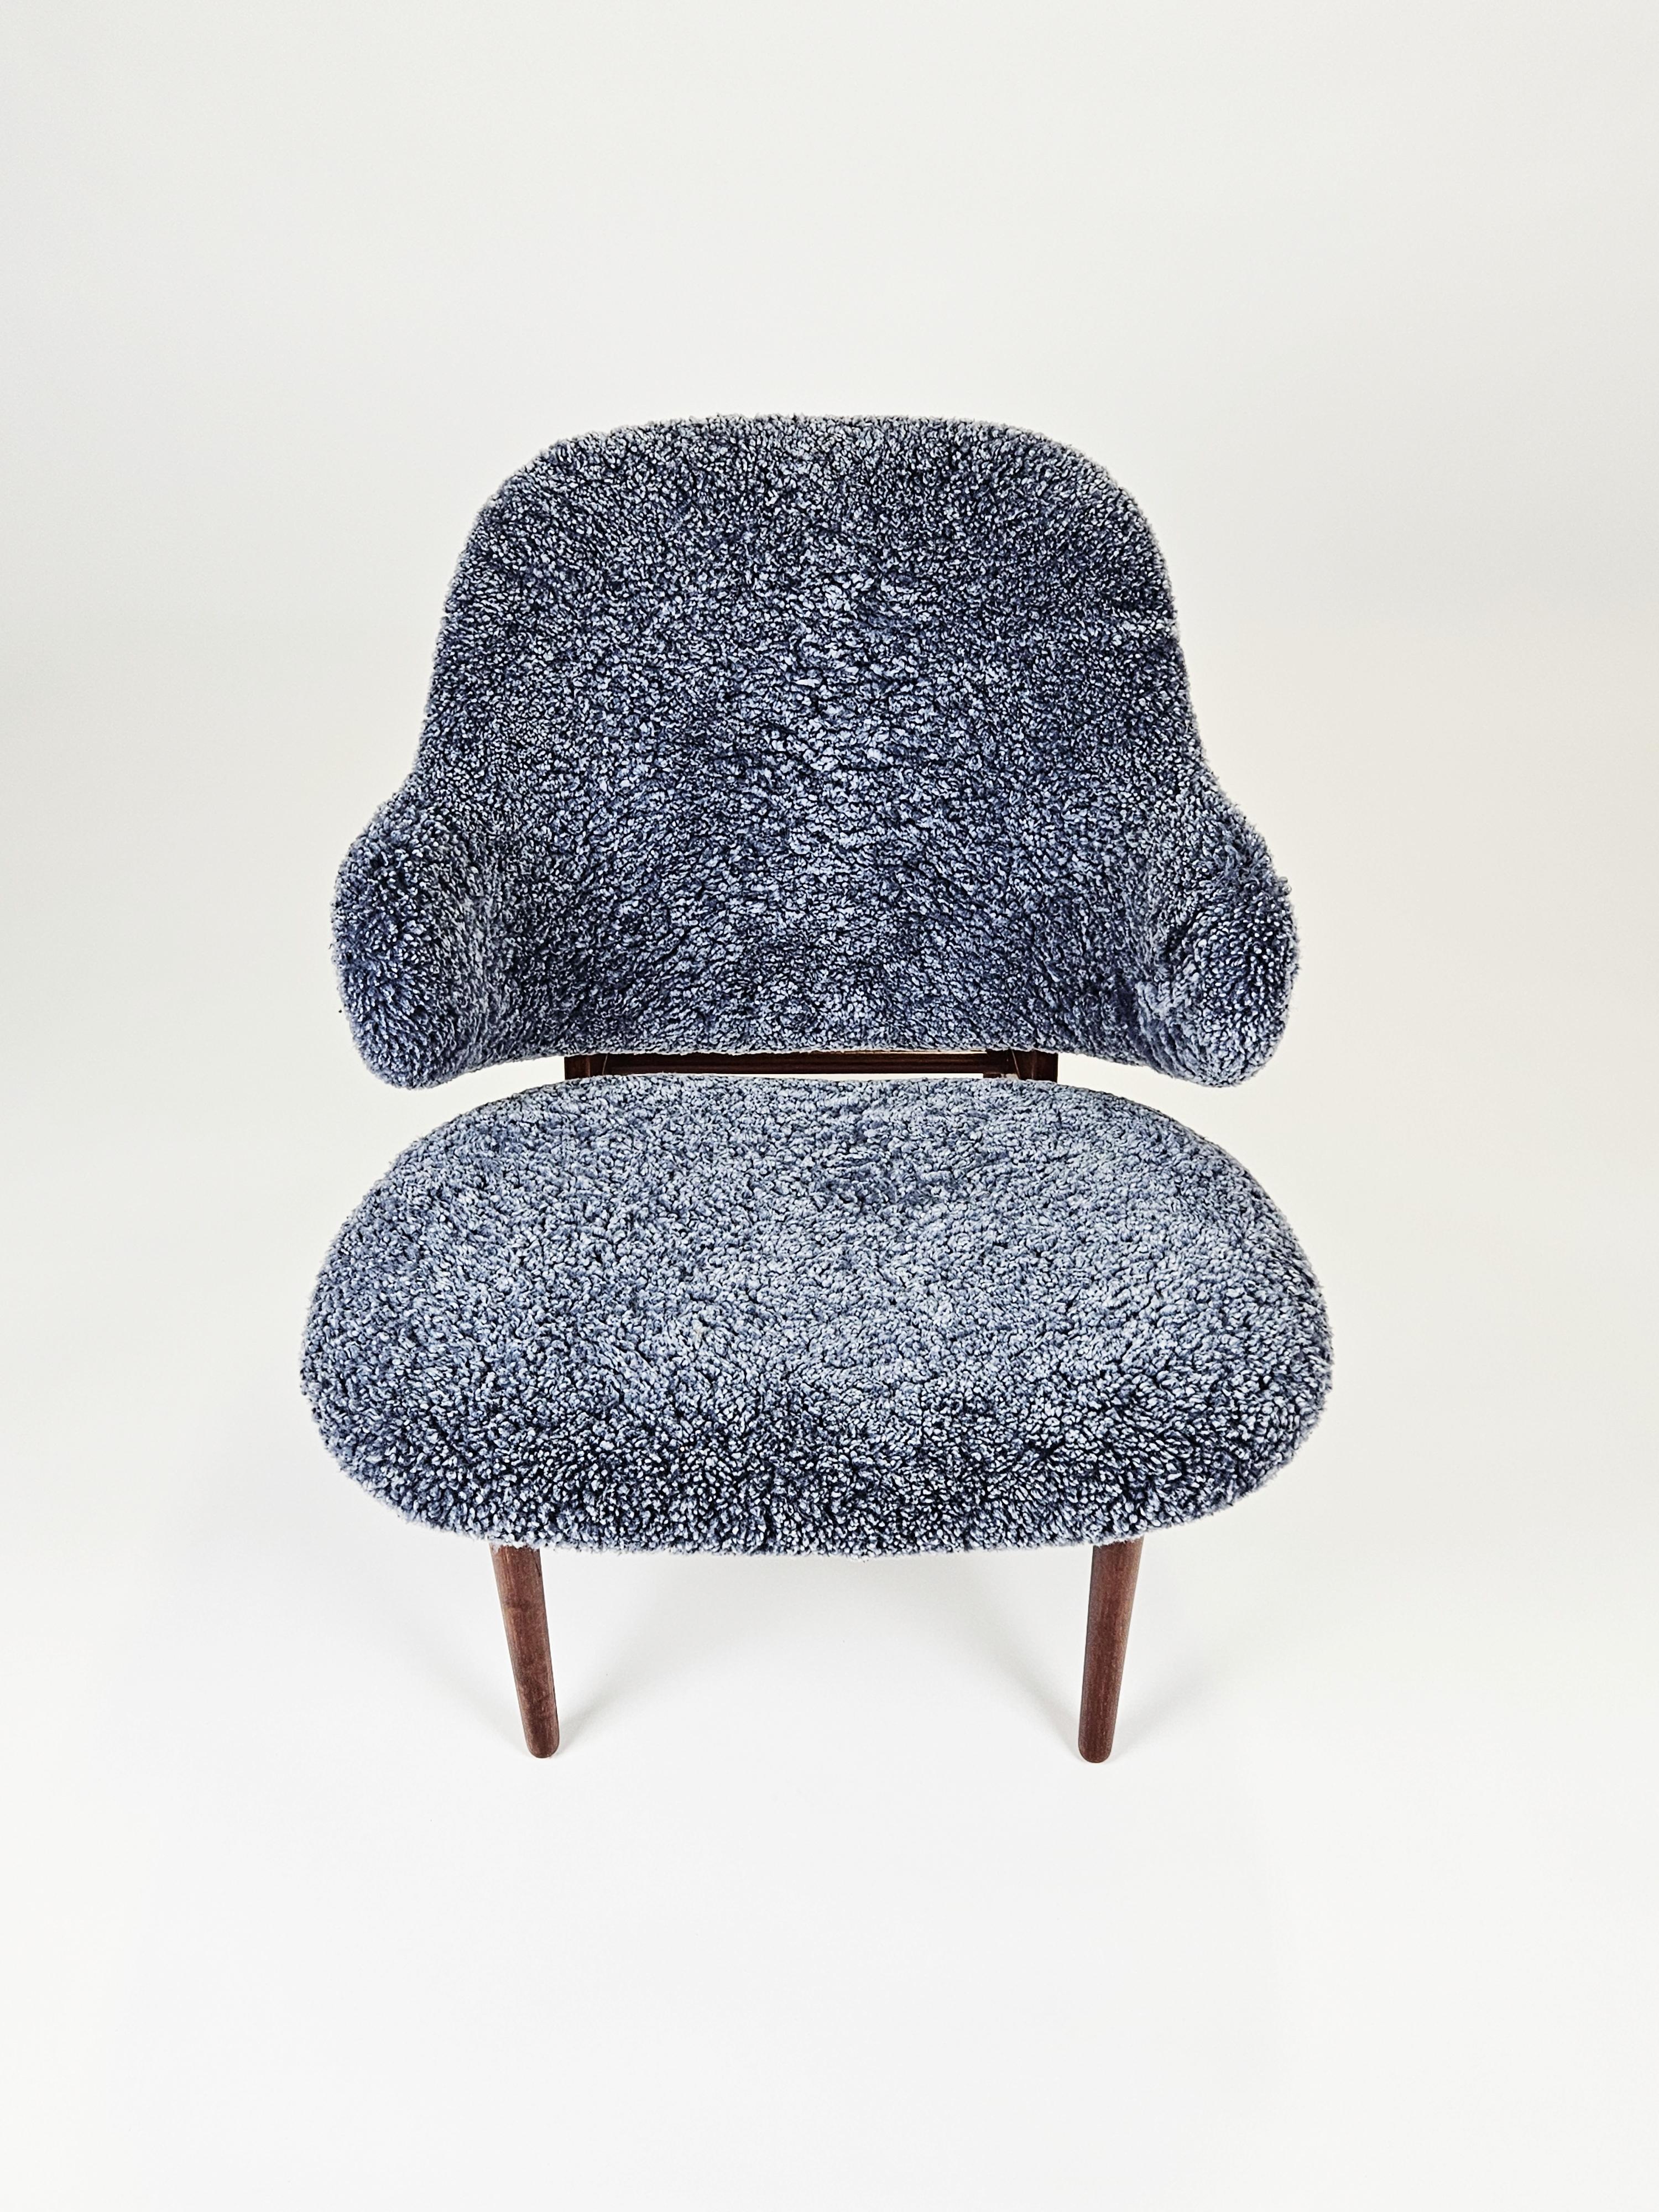 Rare Scandinavian Modern shell chair by IB Kofod Larsen, Denmark, 1950s In Good Condition For Sale In Eskilstuna, SE